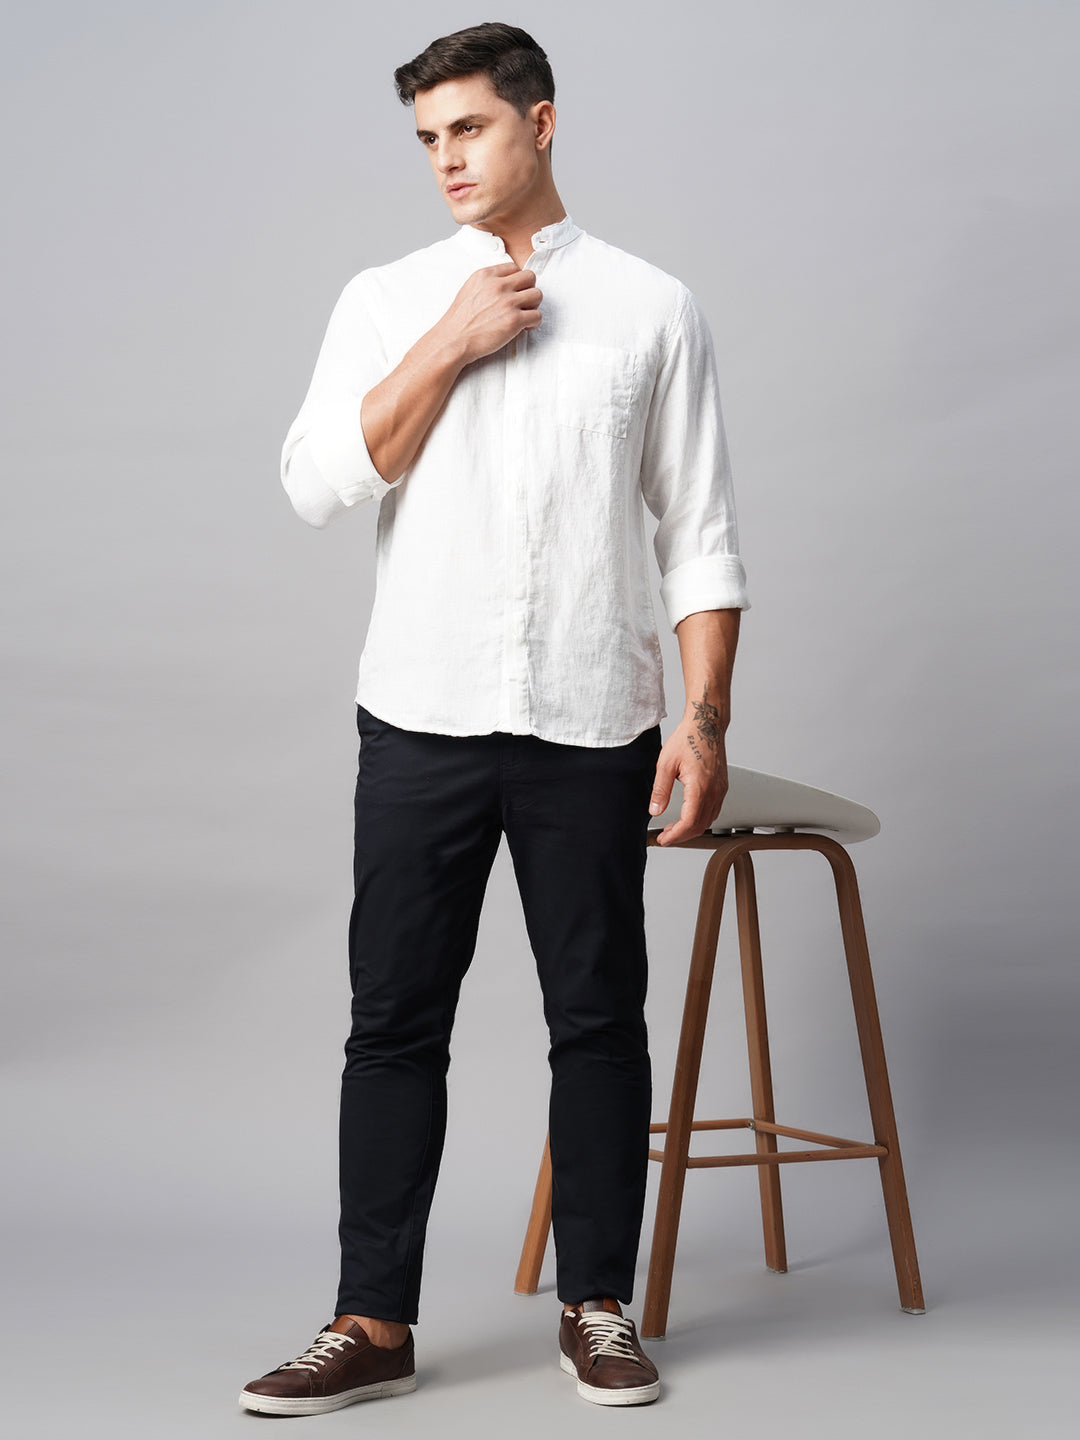 Men's 100% Linen White Band Collared Regular Fit Band Collared Shirt